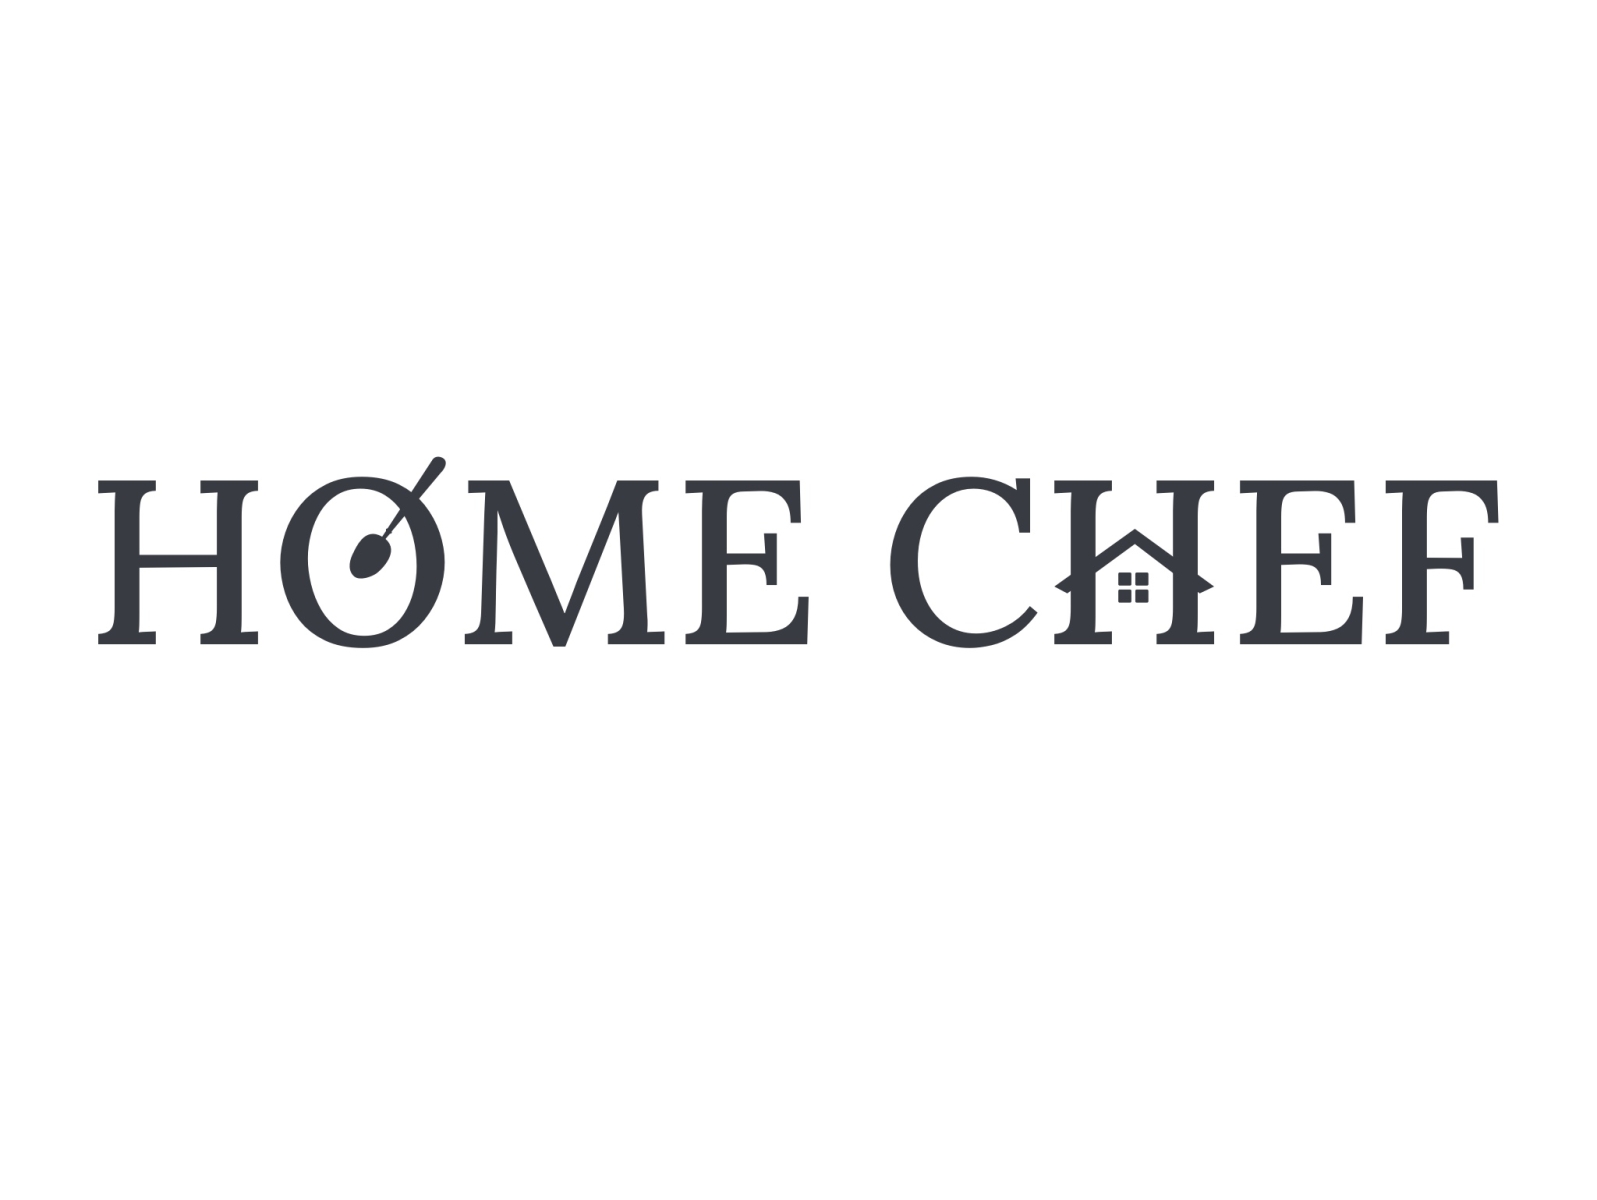 Home Chef logo by Kanika Khurana on Dribbble